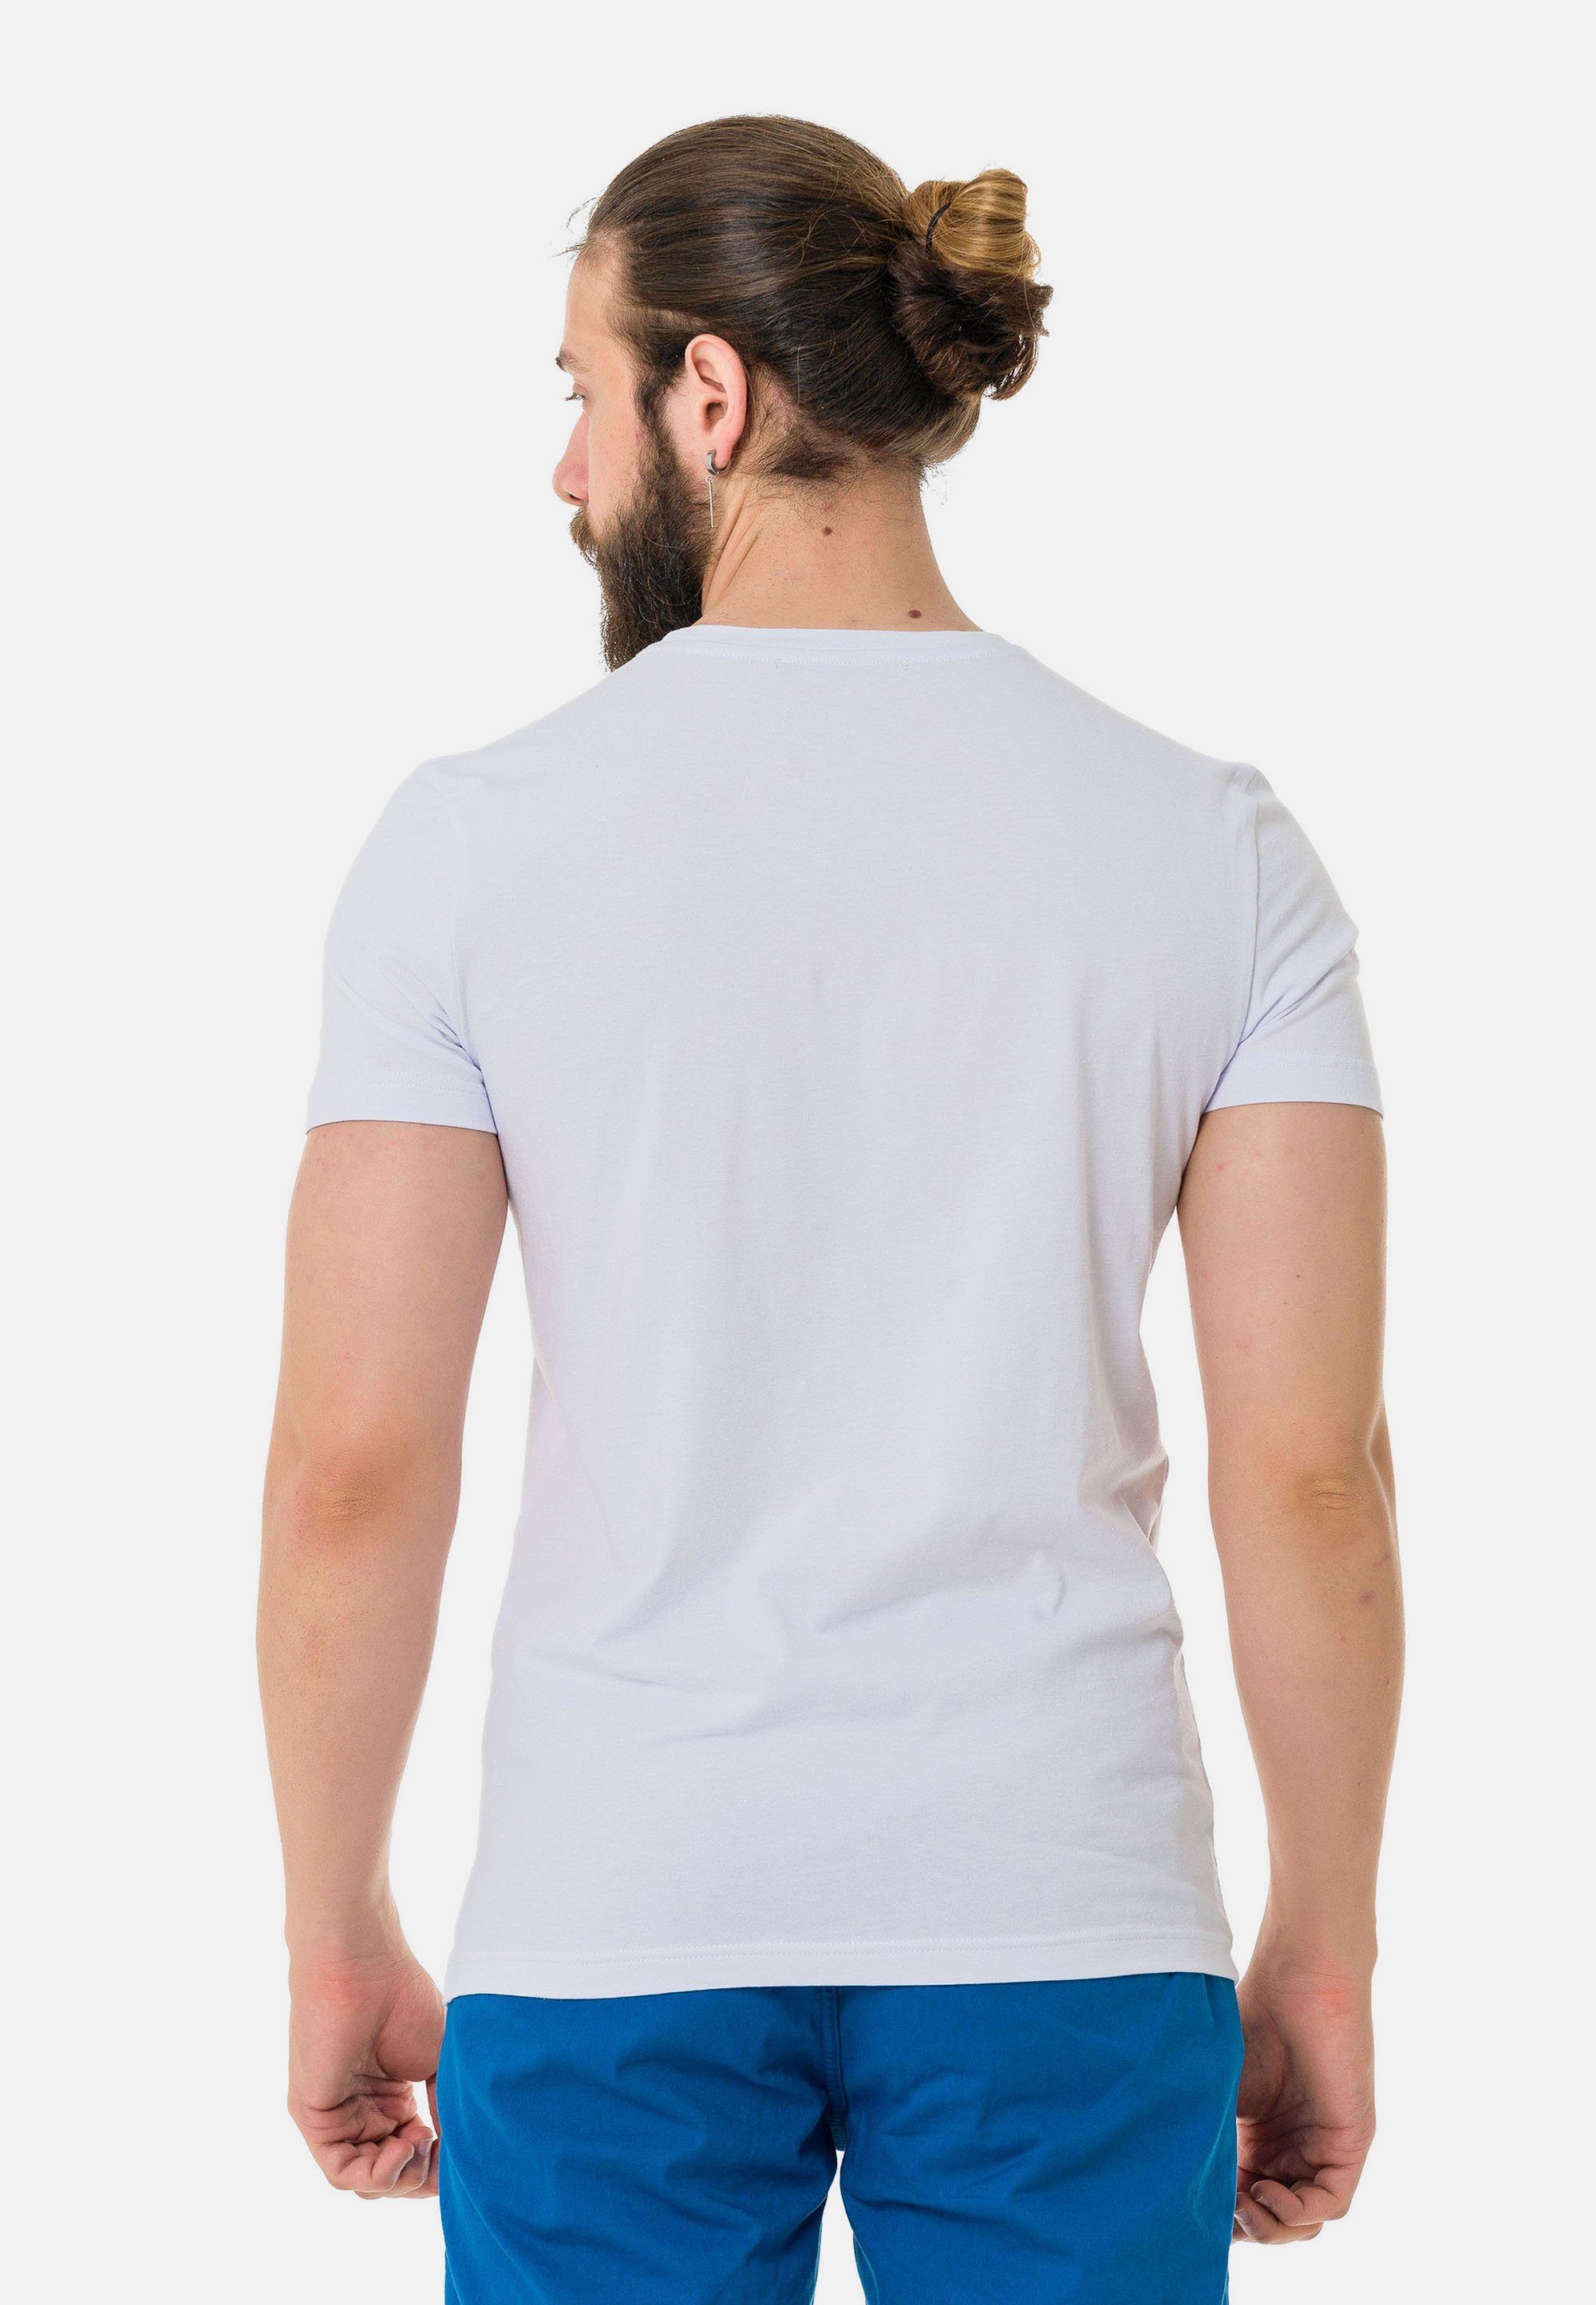 & T-Shirt Baxx mit coolem Cipo weiß Markenprint